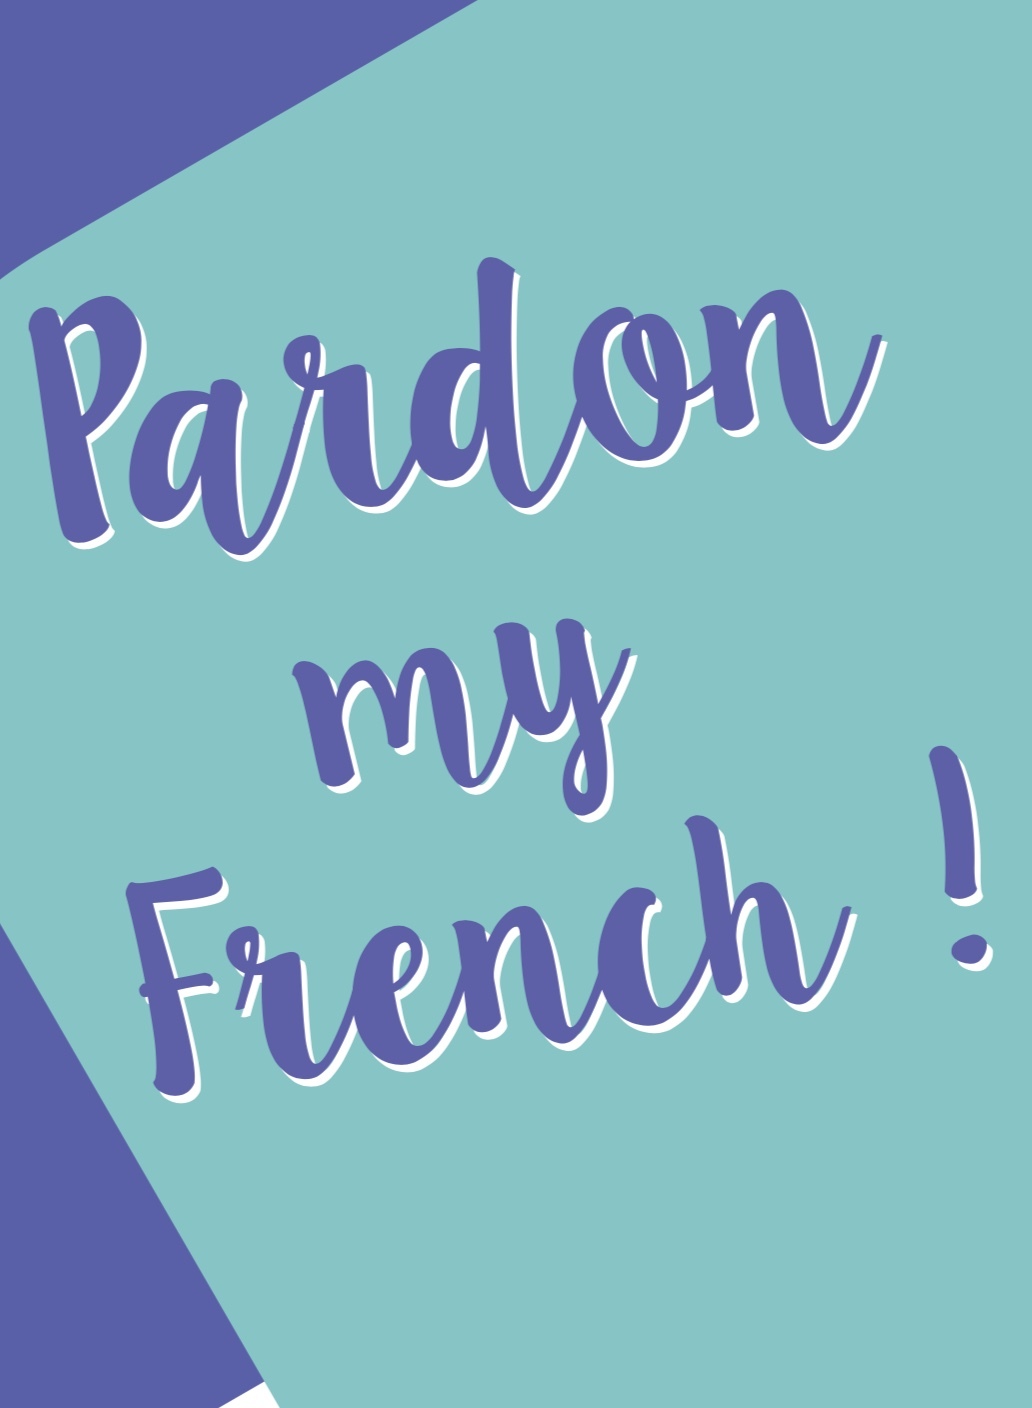 Pardon my French!